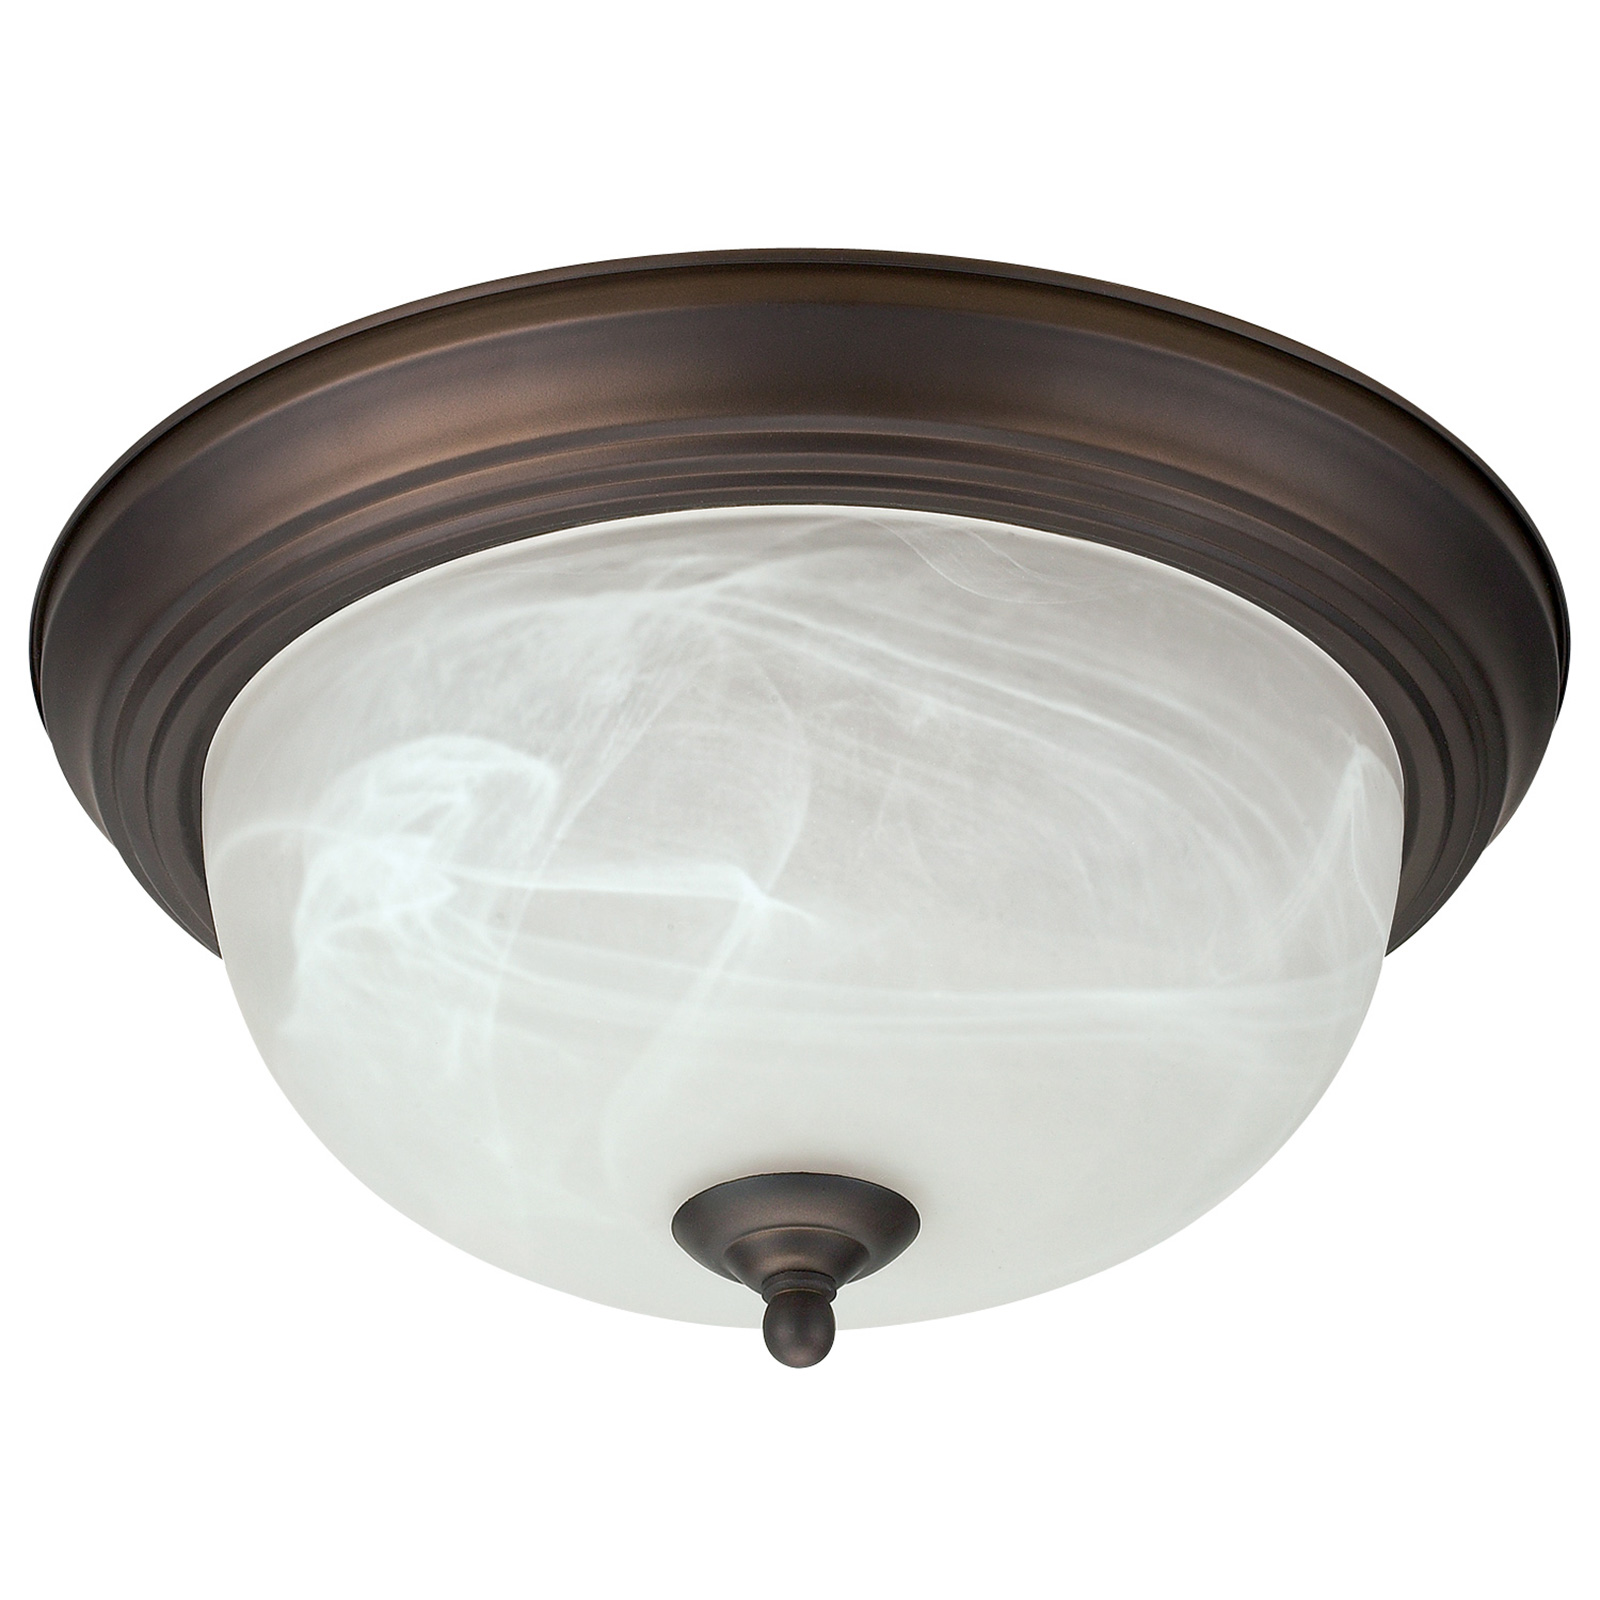 Howplumb Oil Rubbed Bronze Flush Mount Ceiling Light Fixture Globe 13" Alabaster Glass Shade